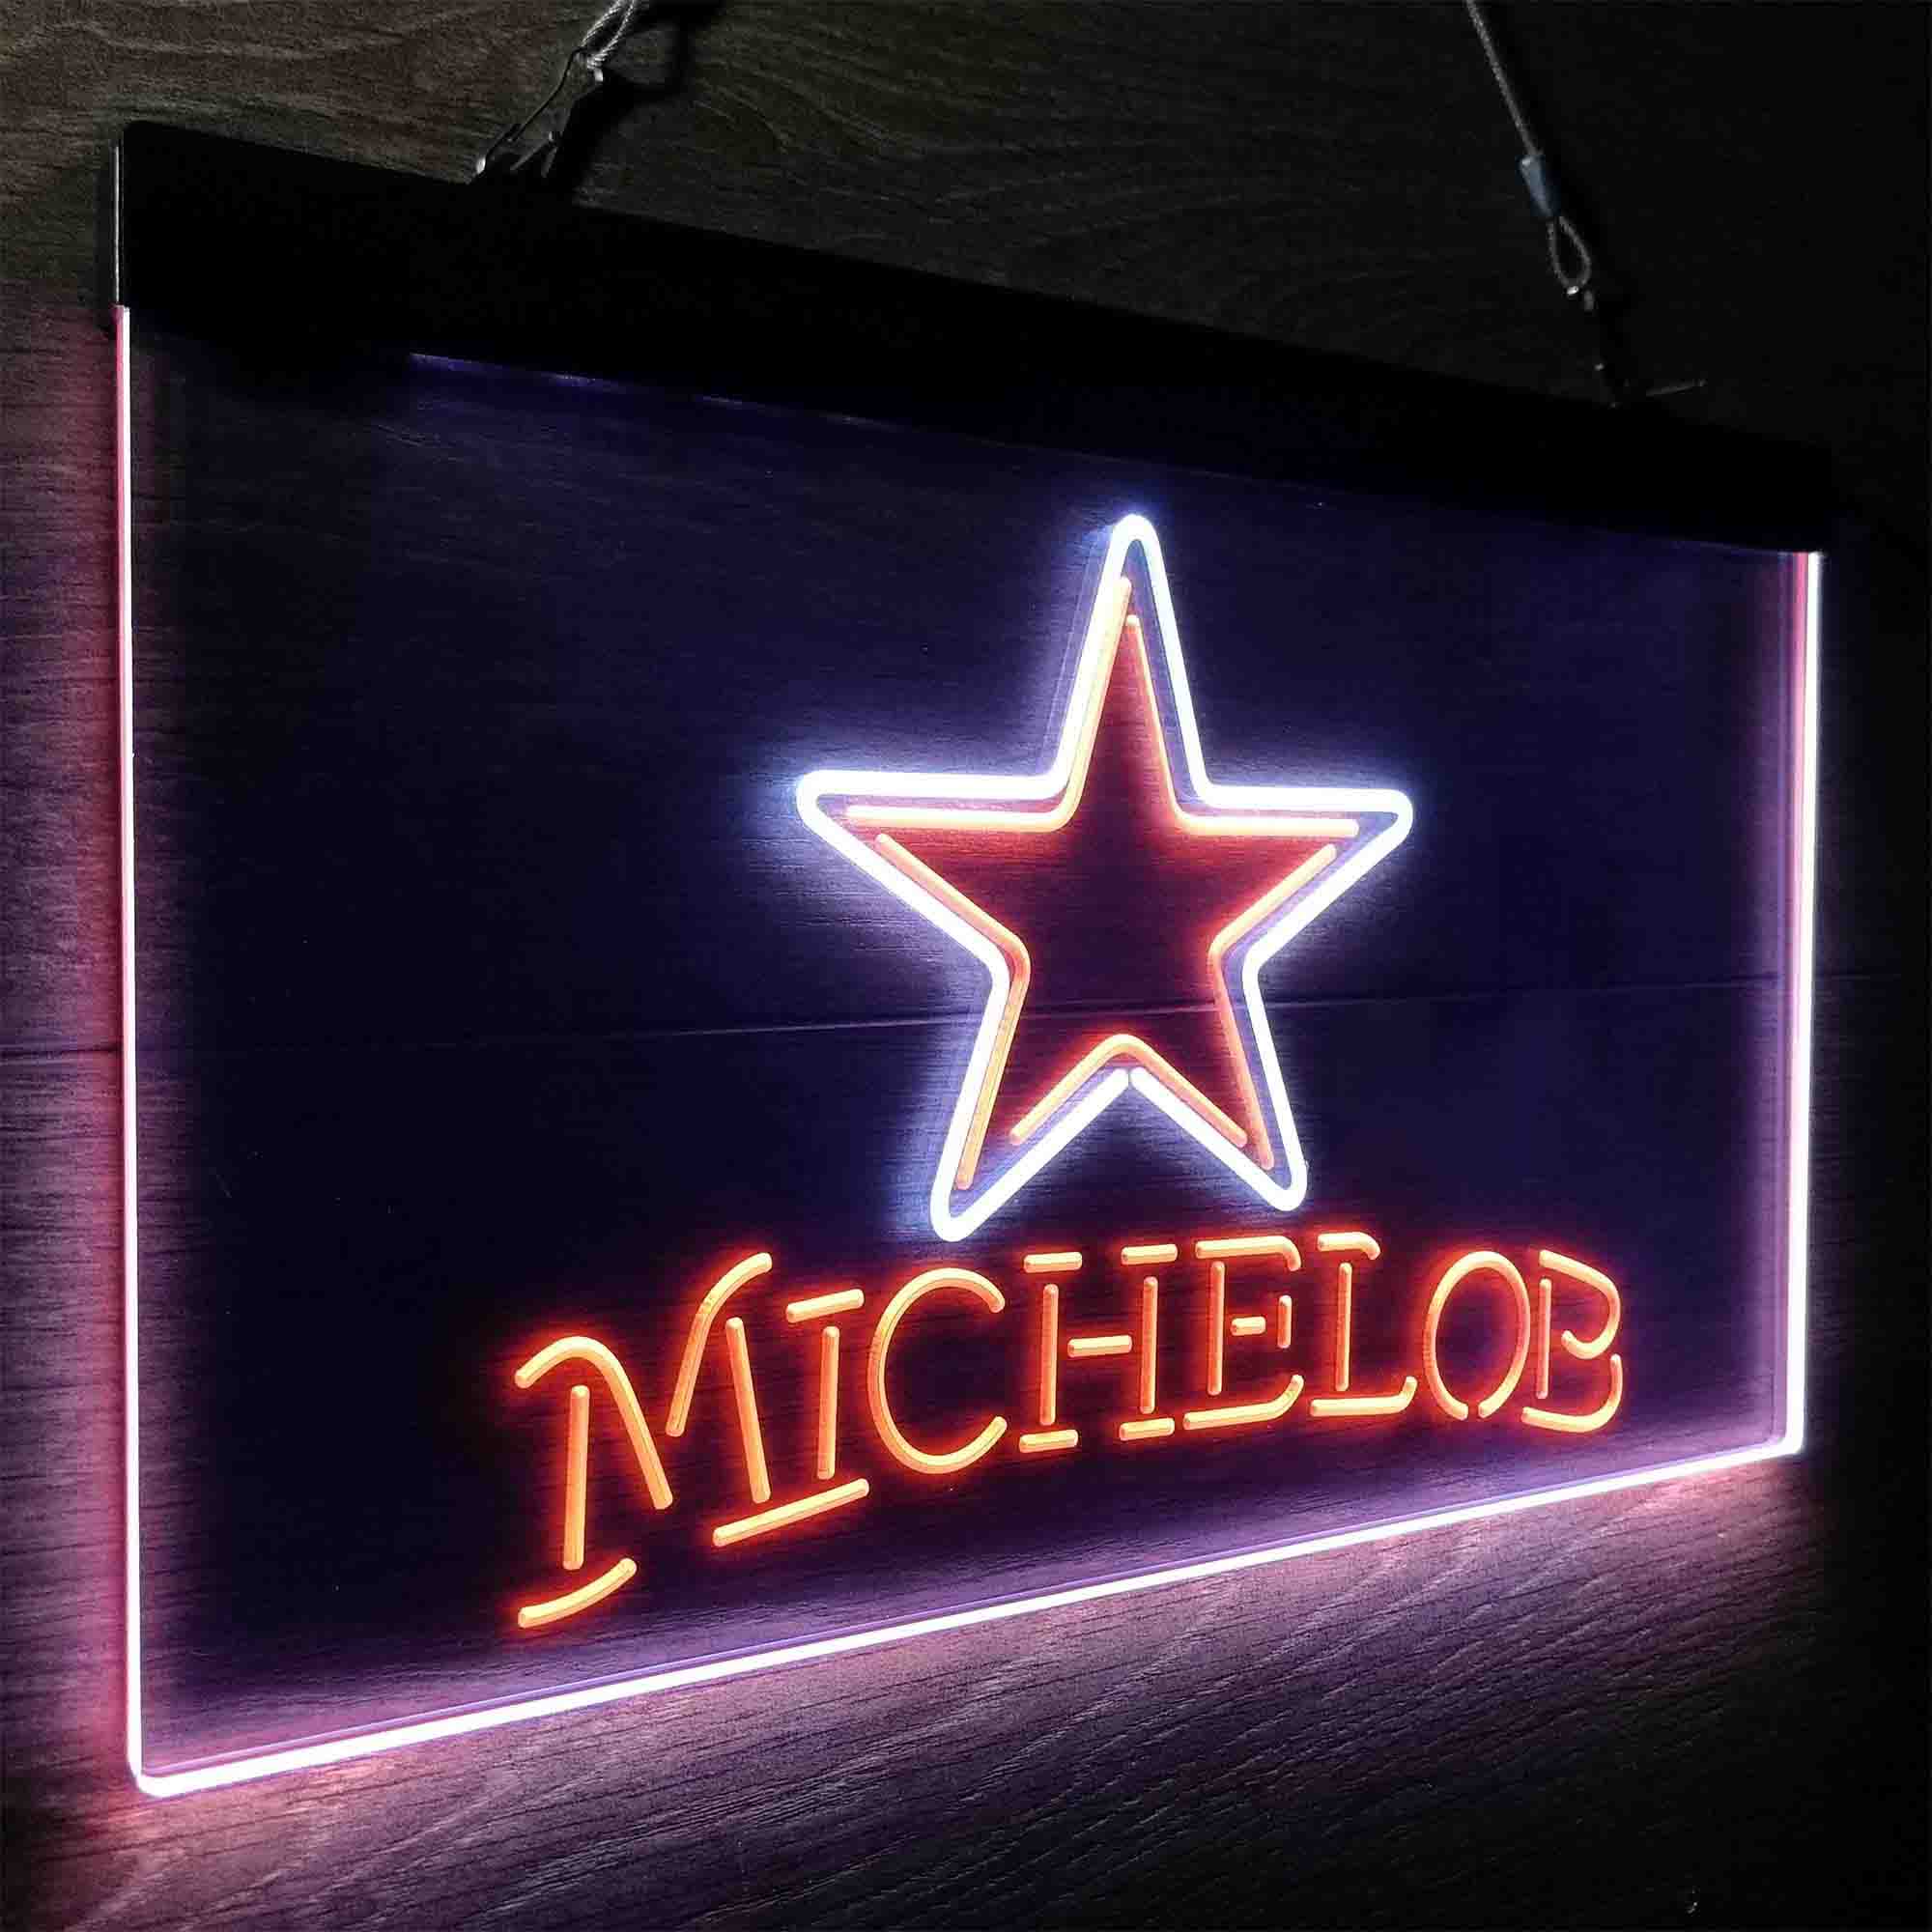 Michelob Bar Dallas Cowboys Est. 1960 LED Neon Sign